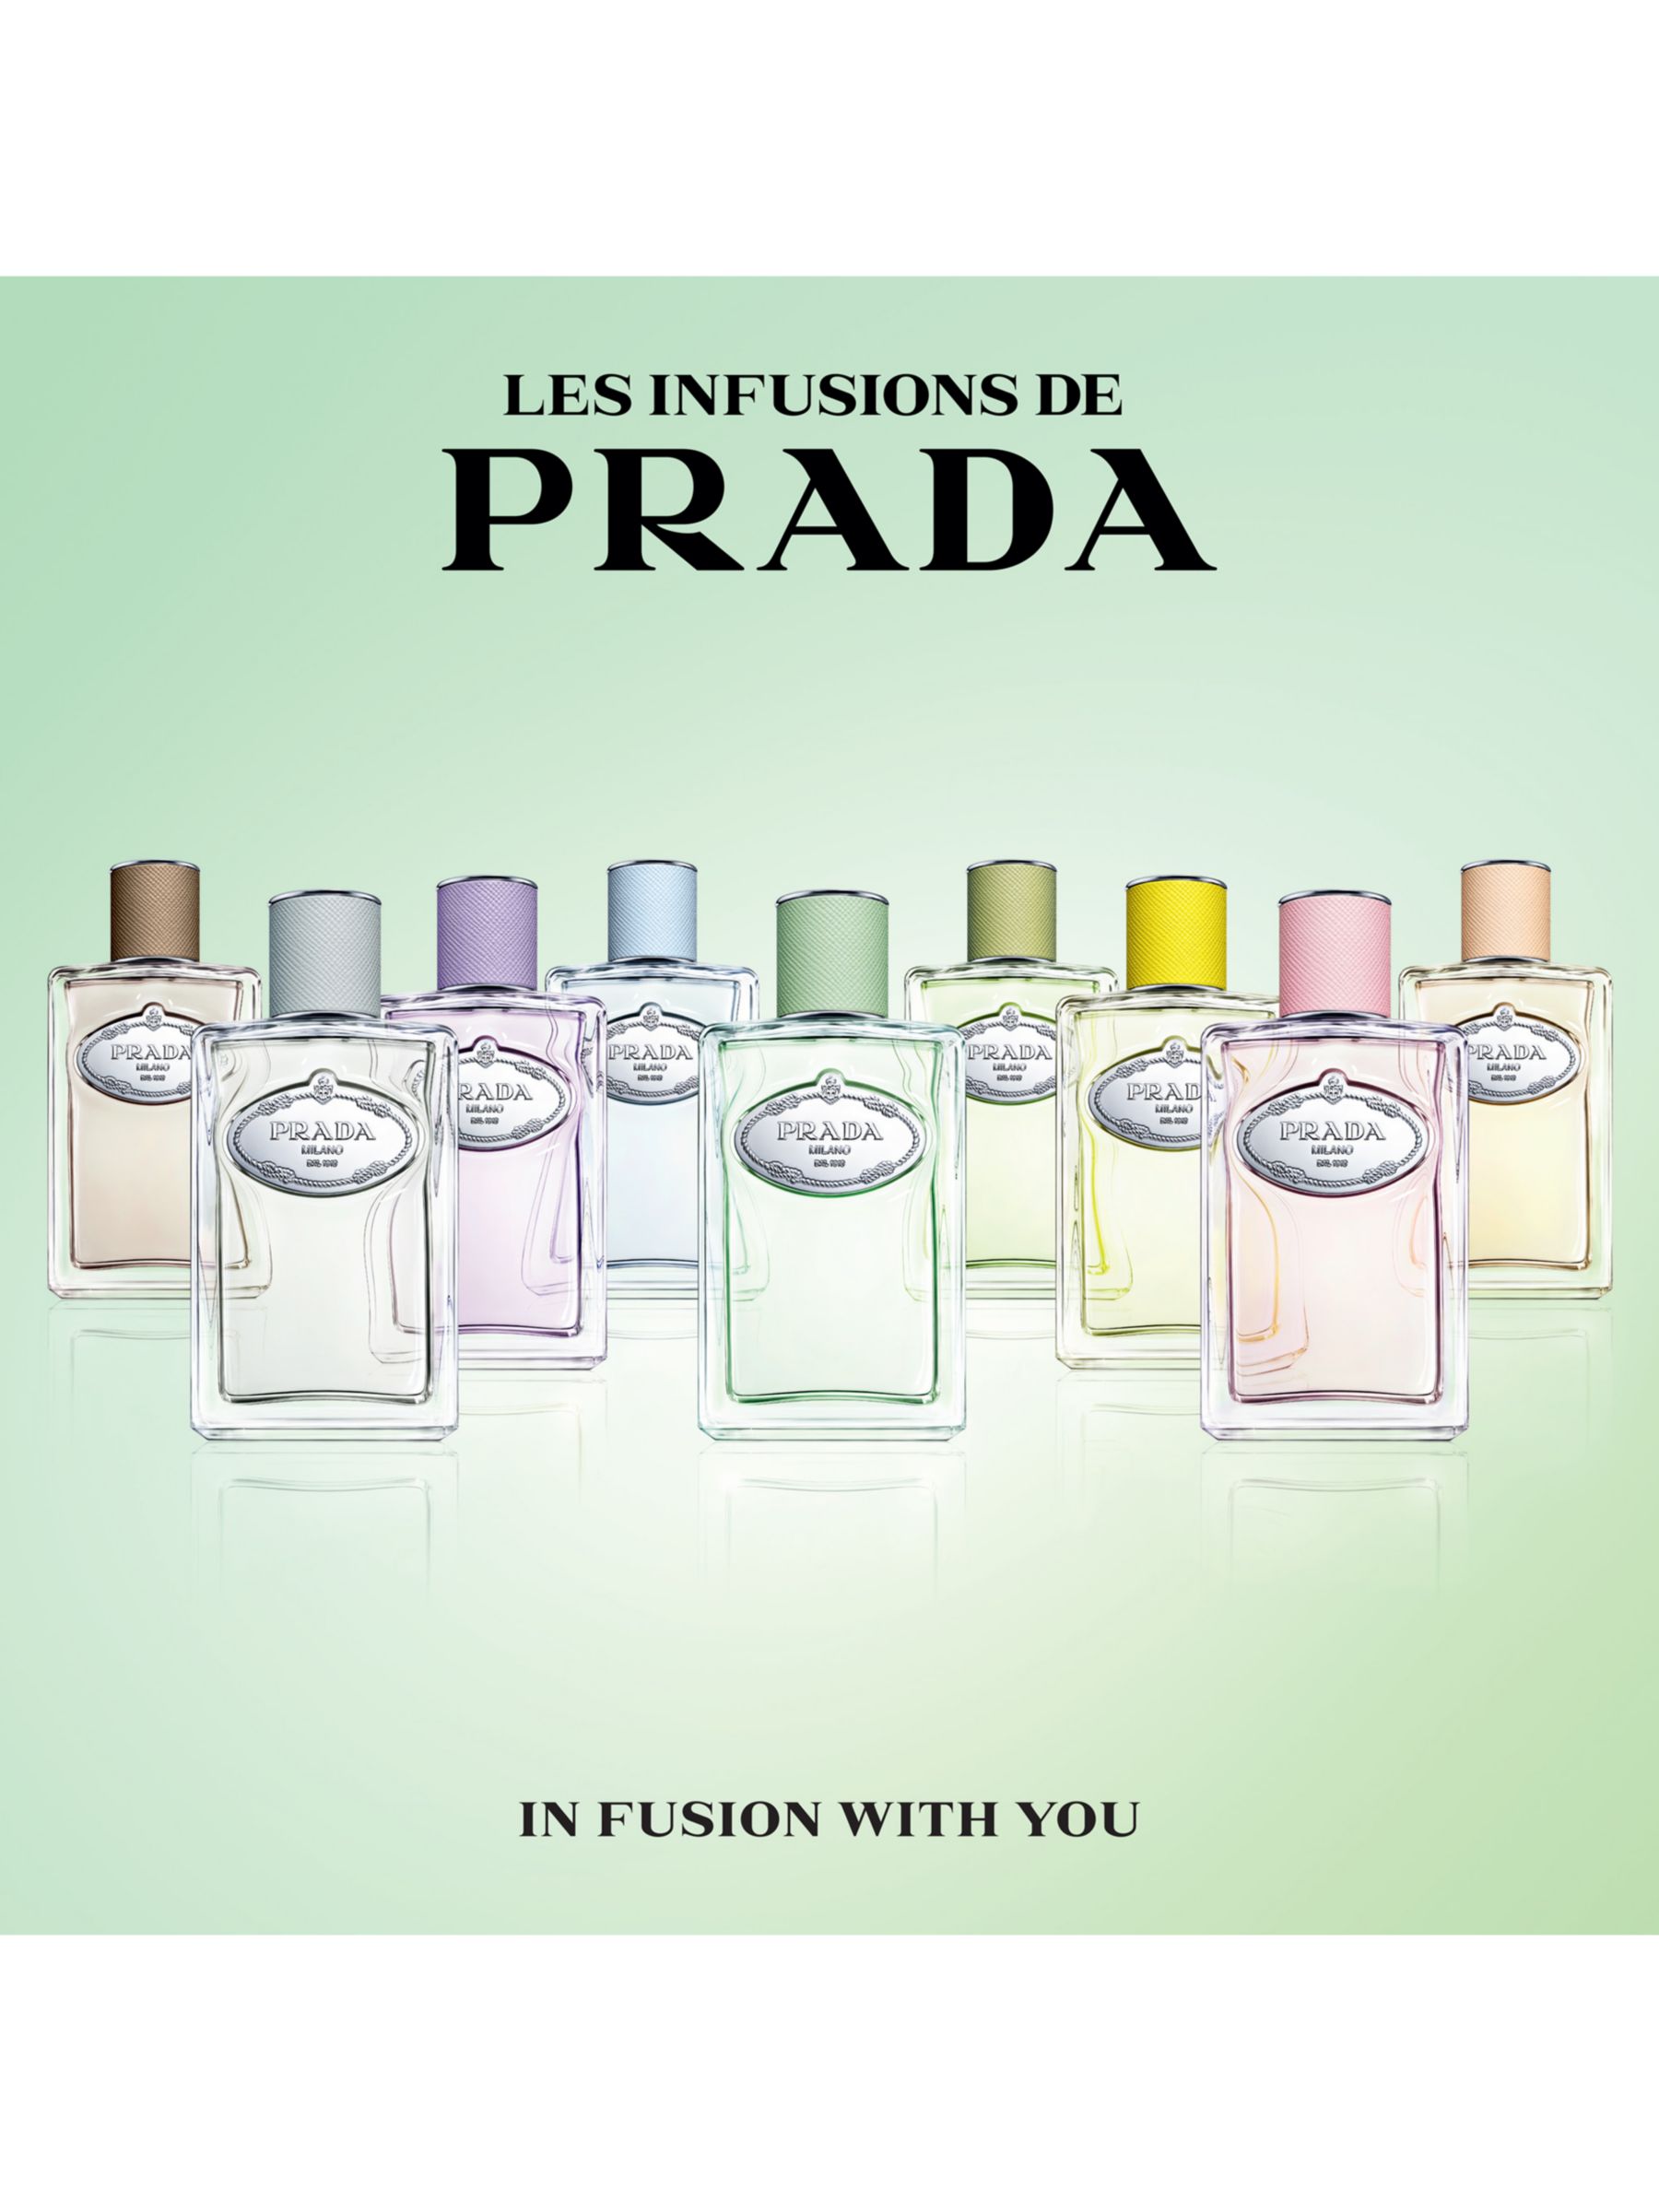 Prada Les Infusions de Prada Iris Cèdre Eau de Parfum, 100ml at John Lewis  & Partners